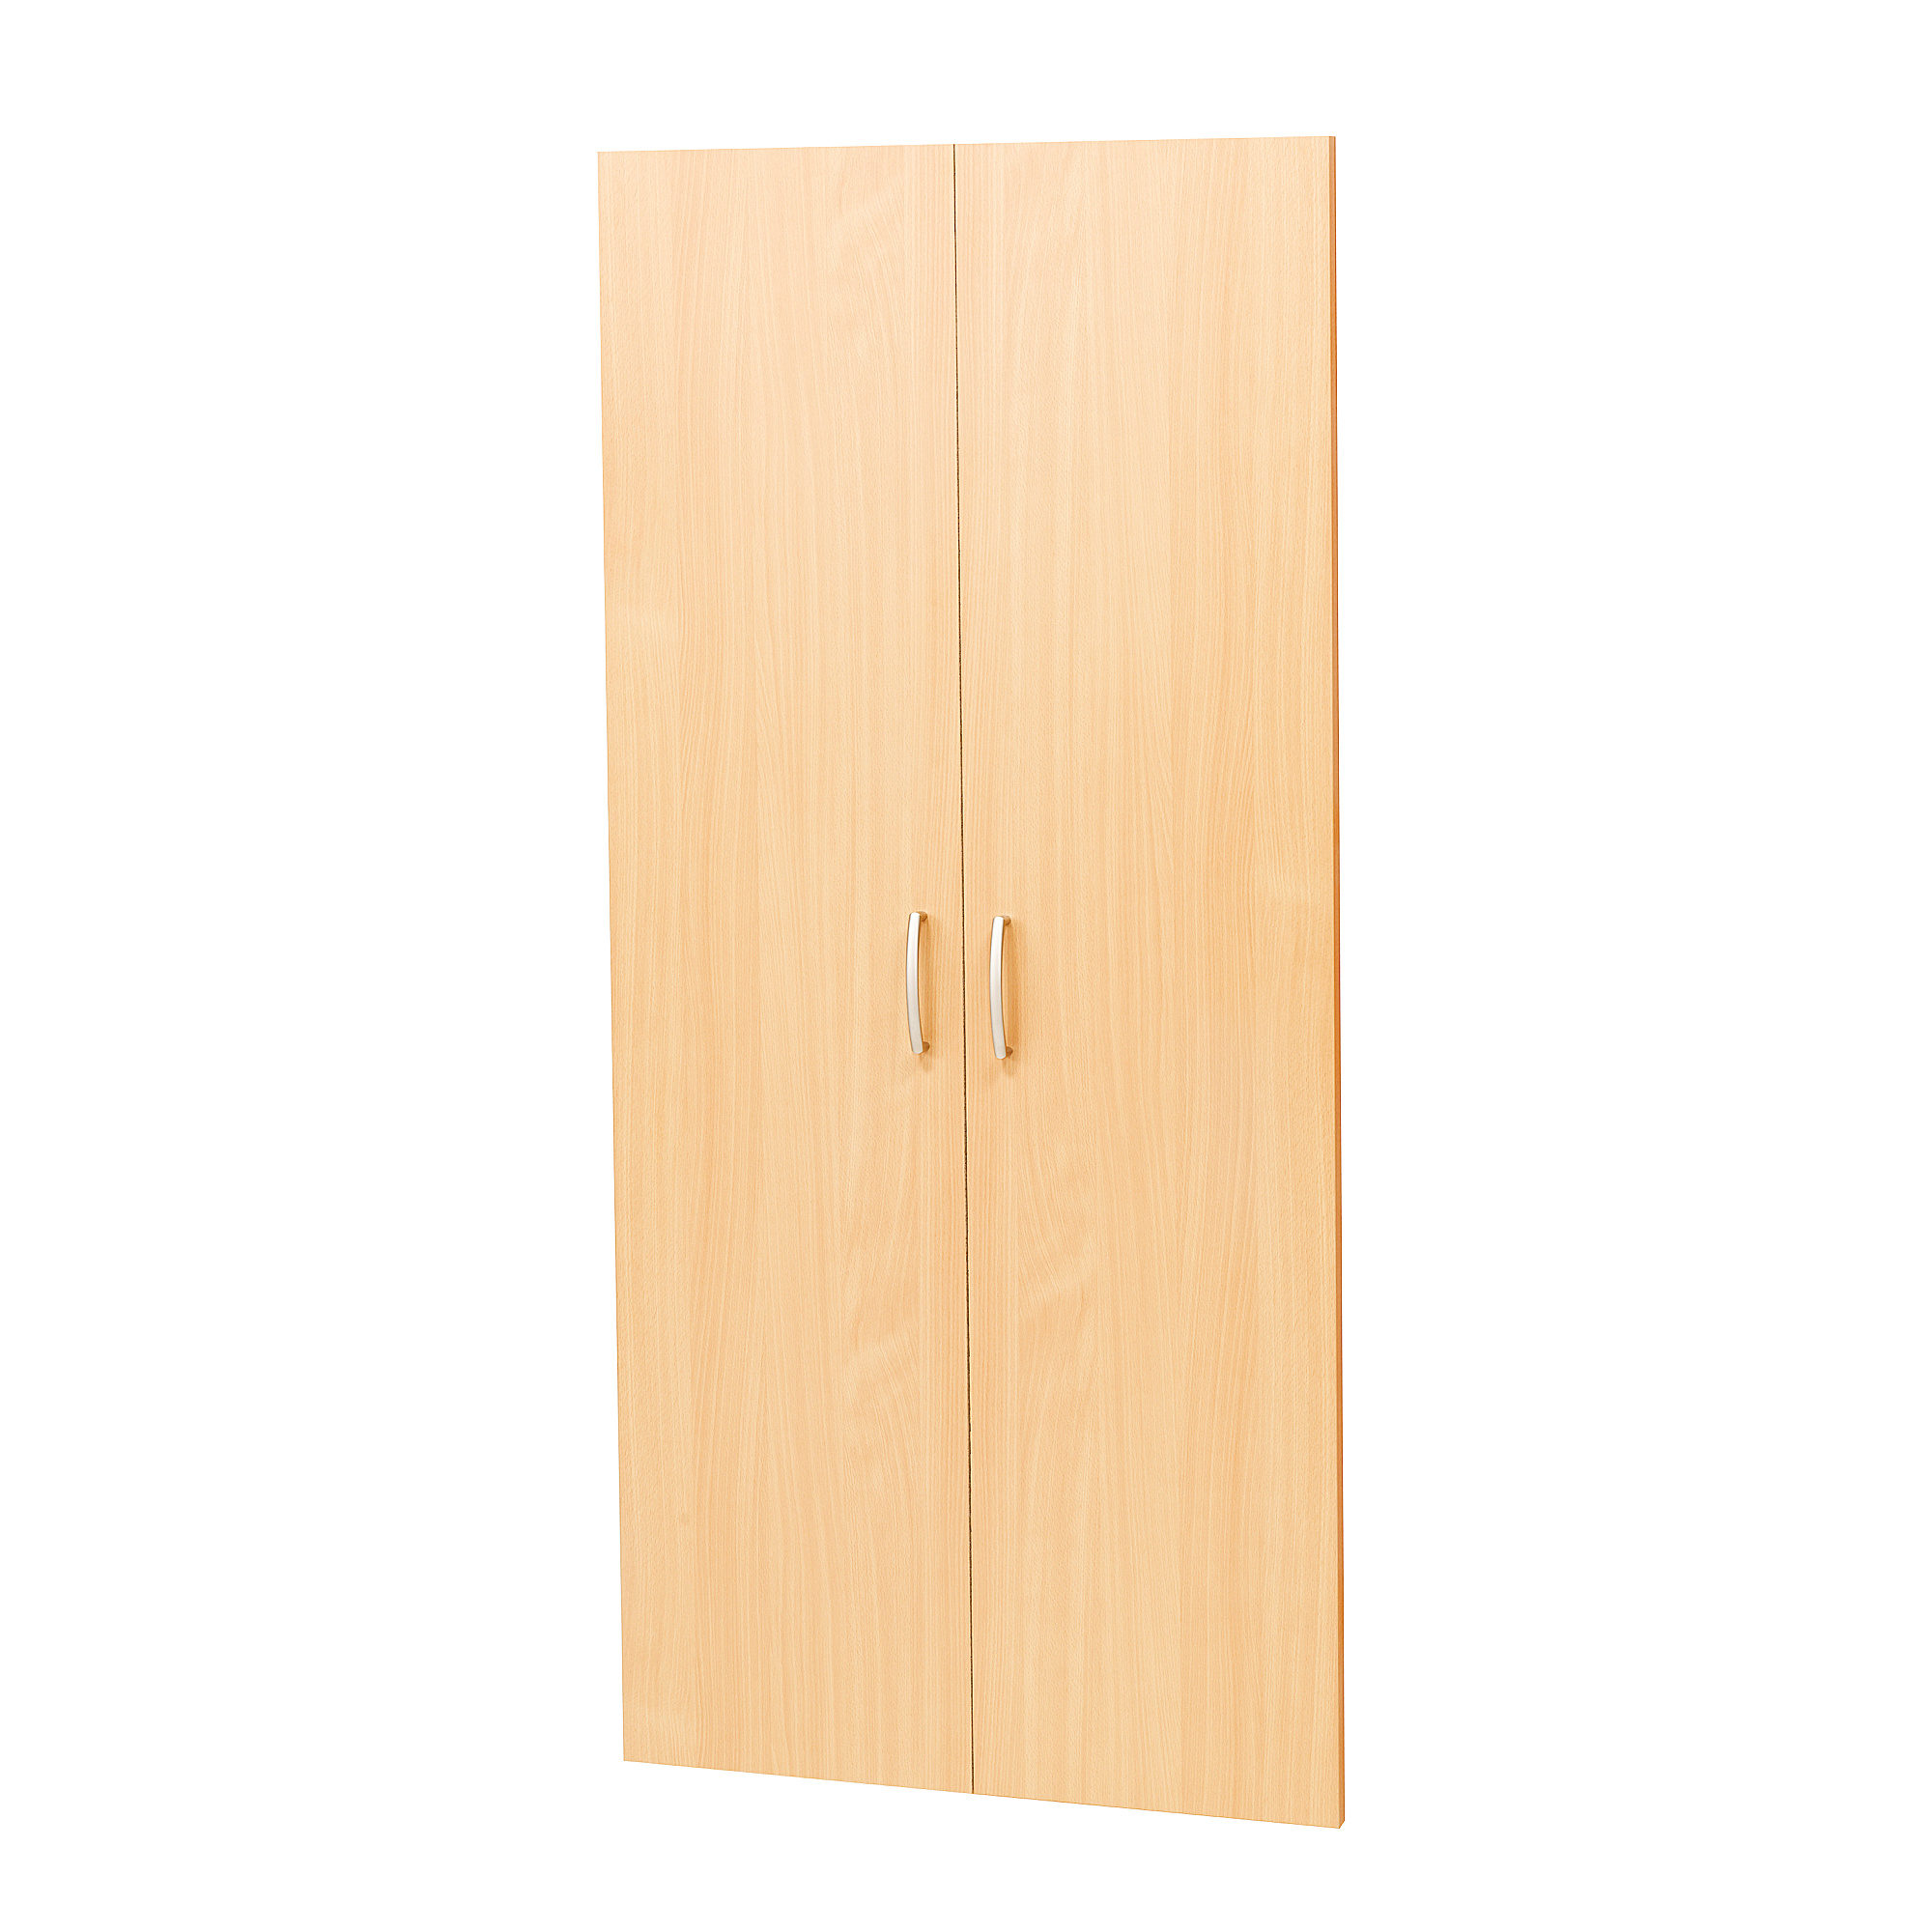 Dveře ke skříním FLEXUS, výška 1610 mm, buk